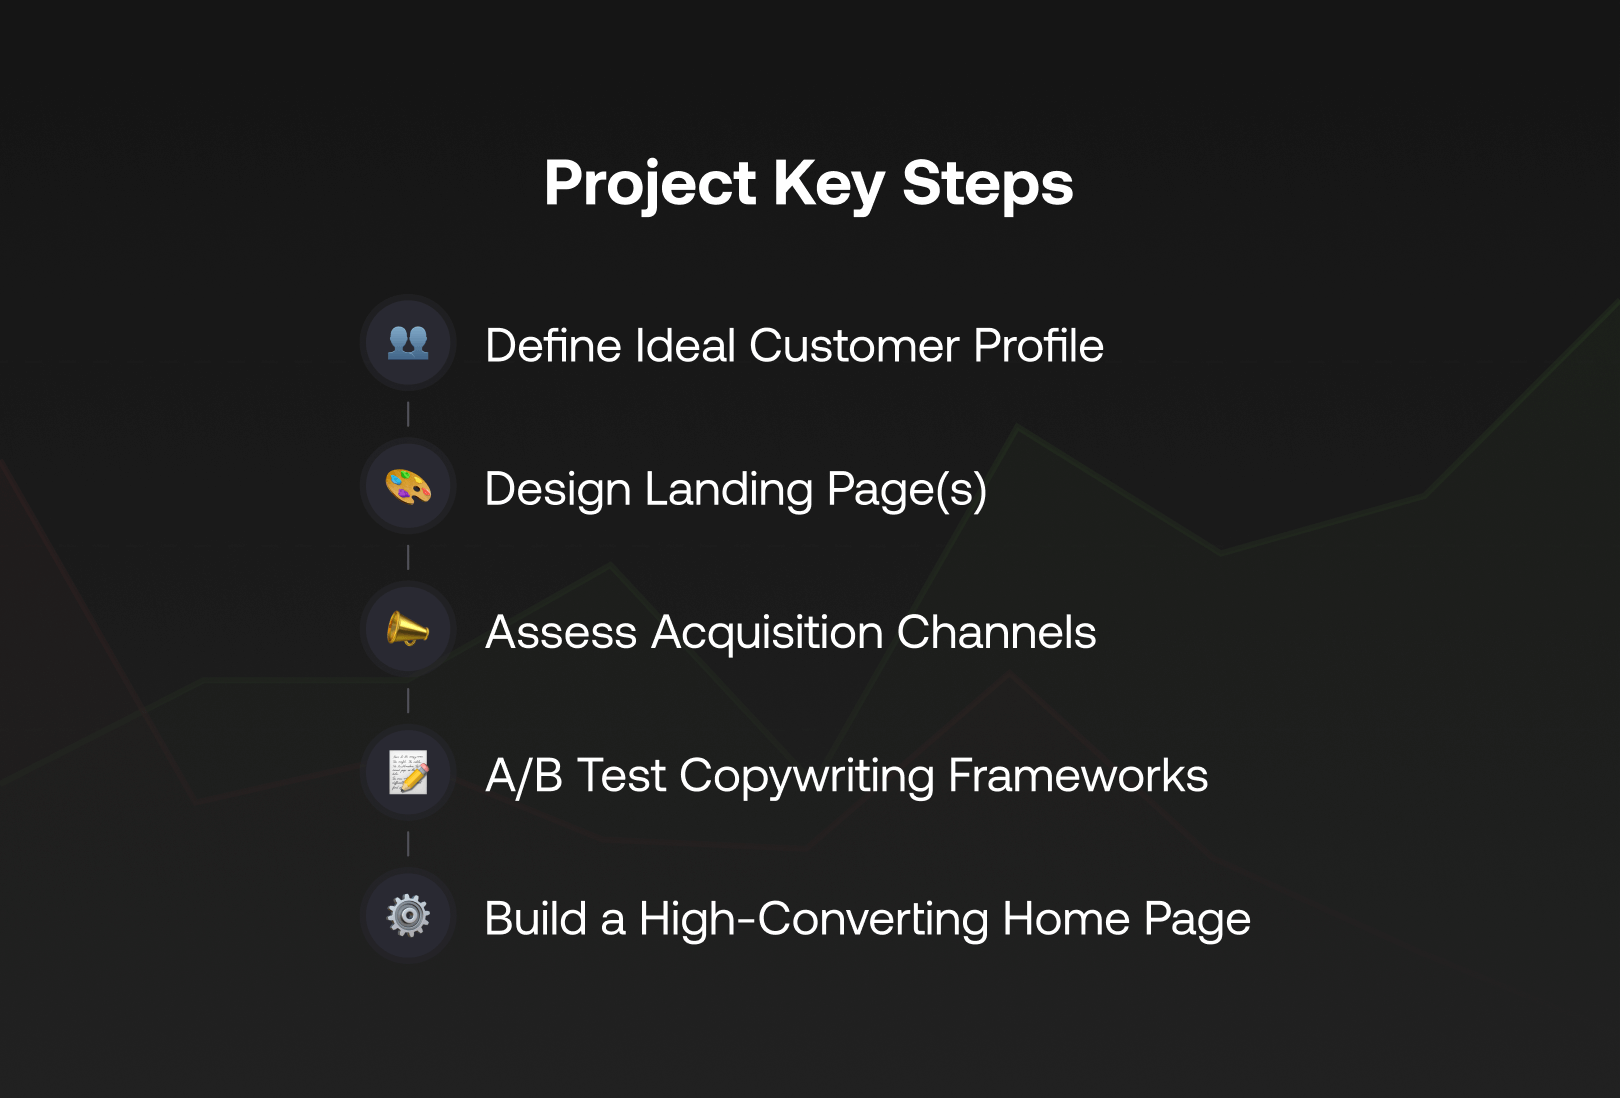 Project Key Steps